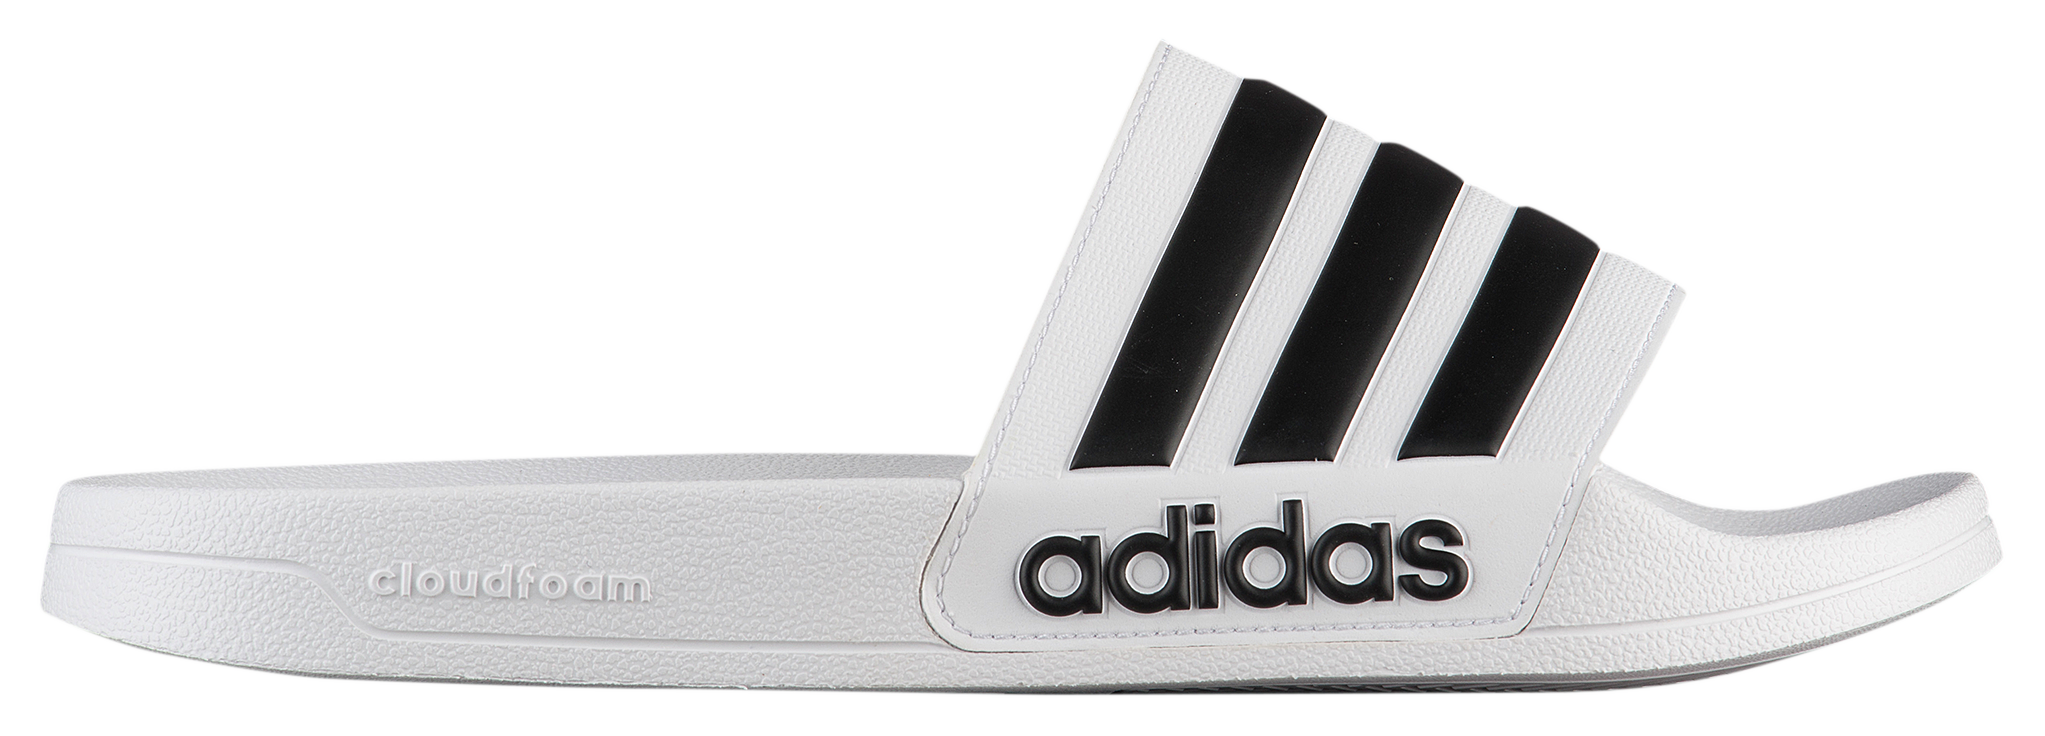 adidas flip flops sports direct